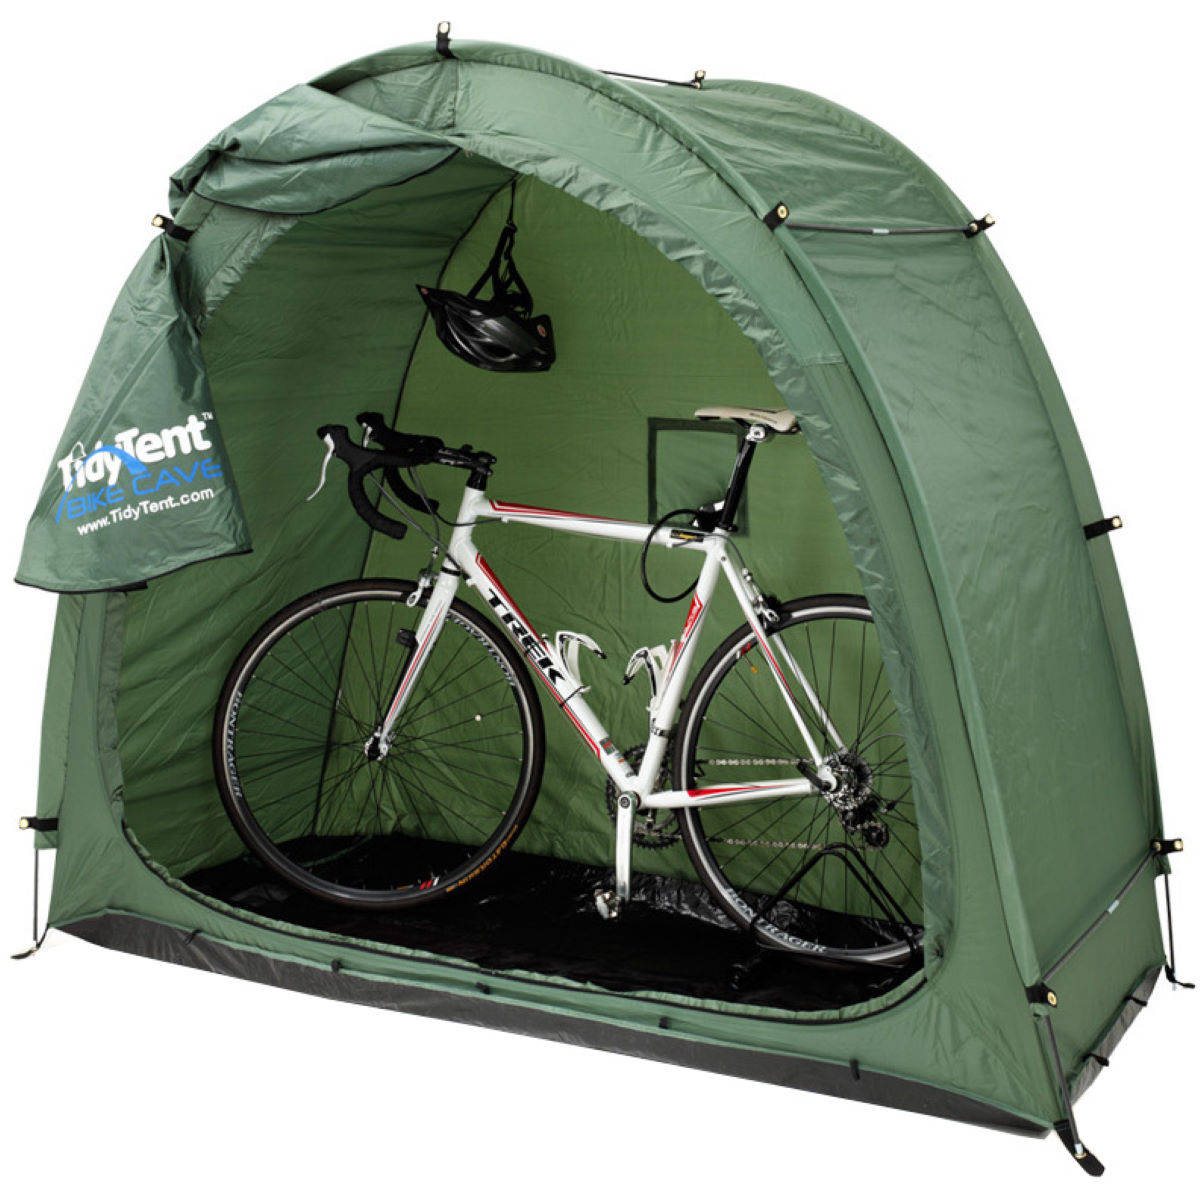 Tienda para bicicleta Bike Cave Tidy Tent - Fundas para bicicleta